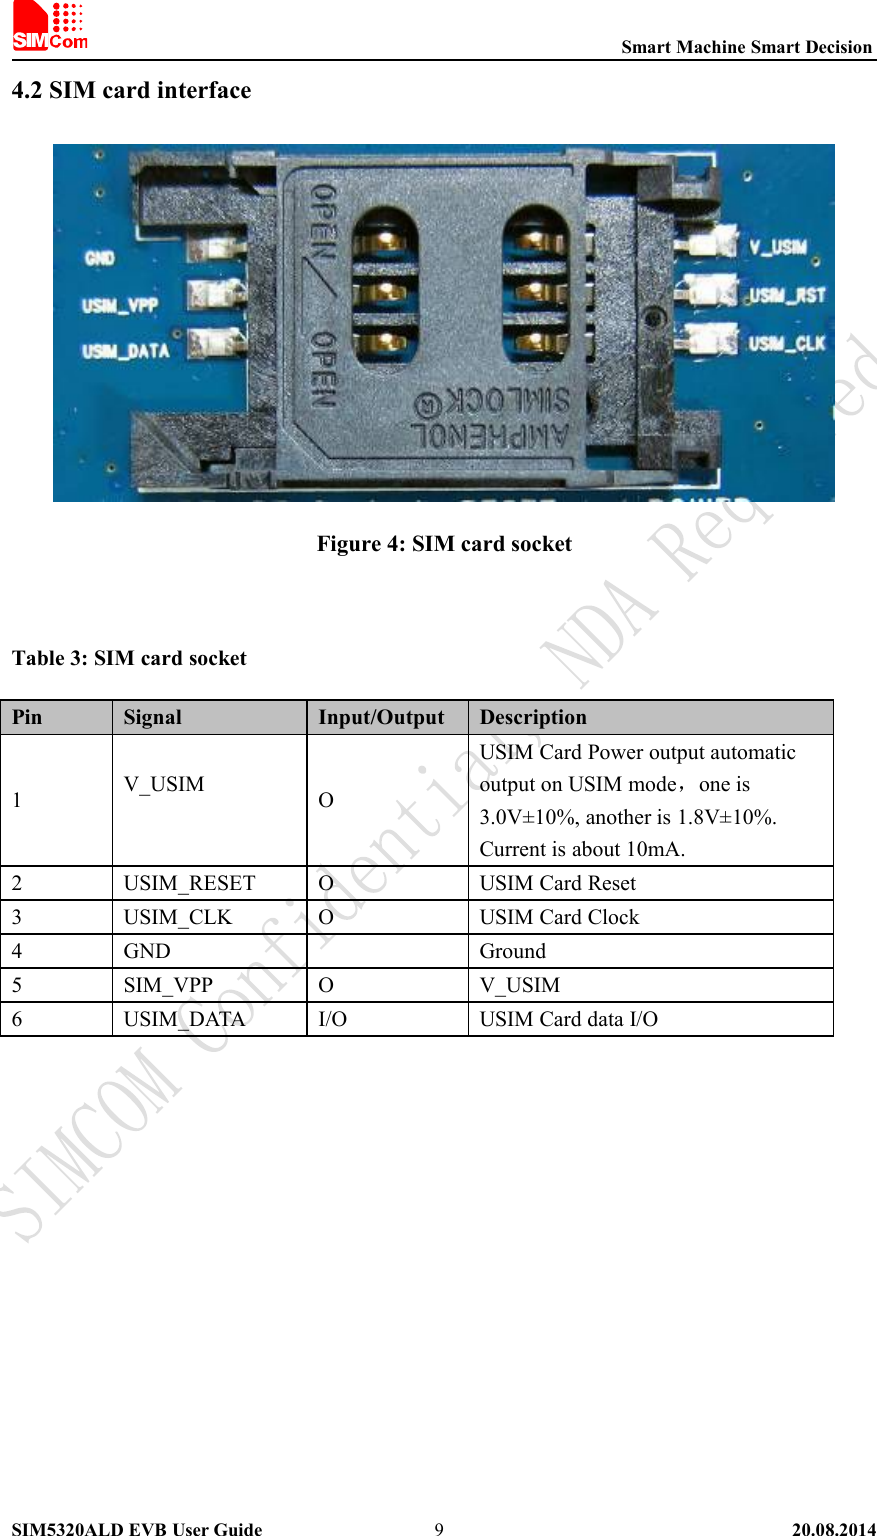 Smart Machine Smart DecisionSIM5320ALD EVB User Guide 20.08.201494.2 SIM card interfaceFigure 4: SIM card socketTable 3: SIM card socketPin Signal Input/Output Description1V_USIM OUSIM Card Power output automaticoutput on USIM mode，one is3.0V±10%, another is 1.8V±10%.Current is about 10mA.2 USIM_RESET O USIM Card Reset3 USIM_CLK O USIM Card Clock4 GND Ground5 SIM_VPP OV_USIM6 USIM_DATA I/OUSIM Card data I/O